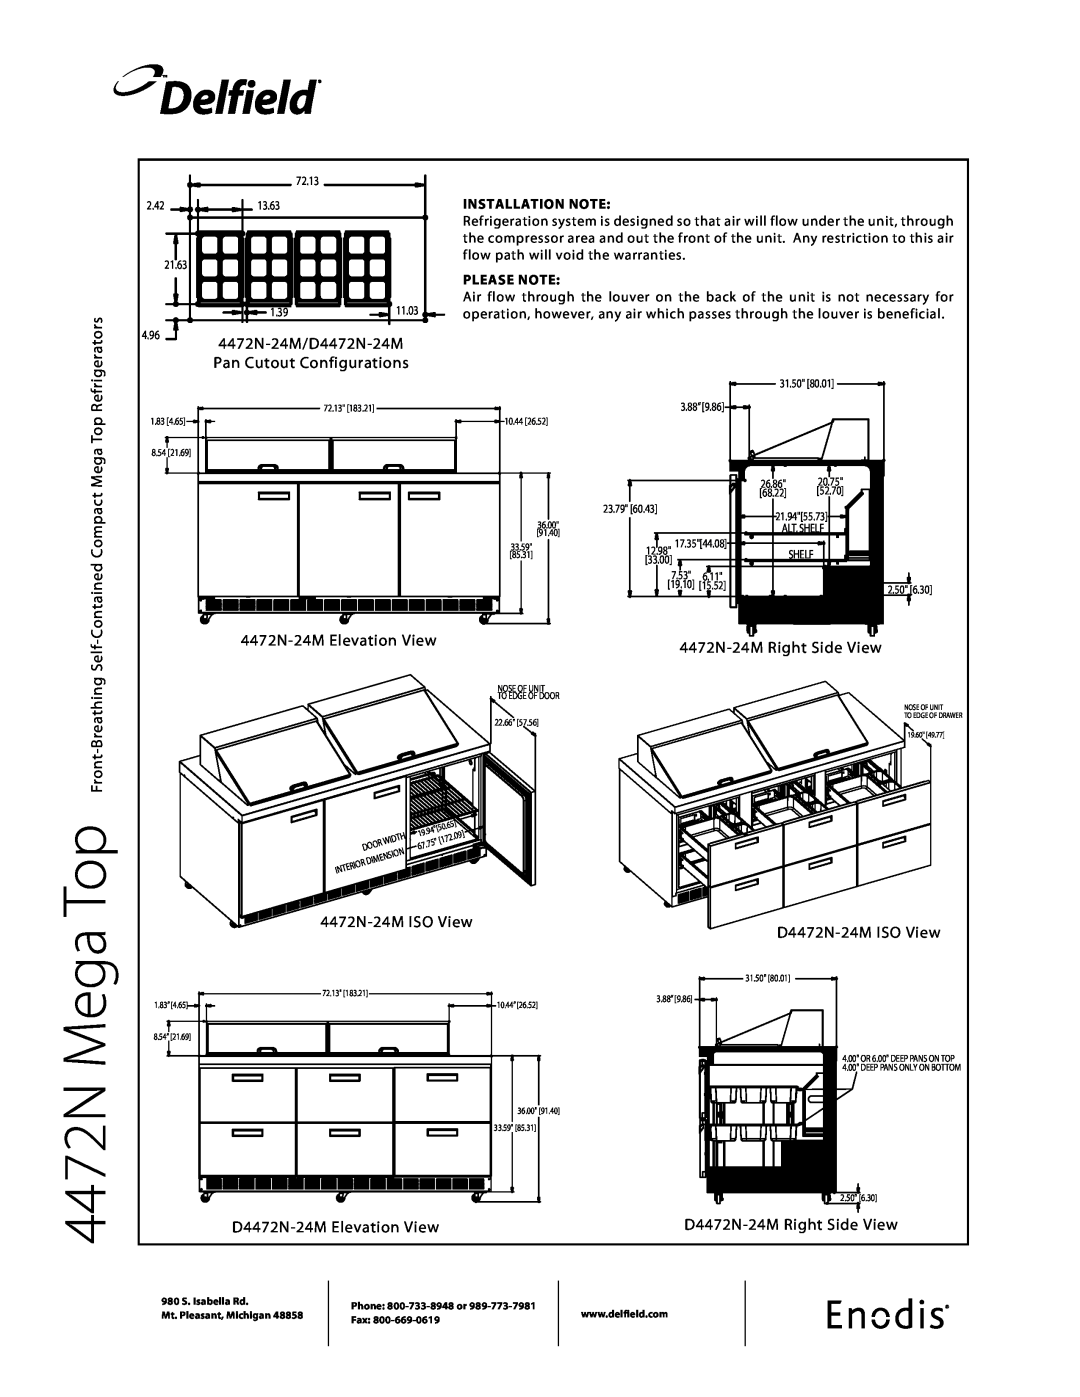 Delfield Contained Compact Mega Top Refrigerators,  4472N-24M/D4472N-24M Pan Cutout Configurations, Self, Delfield 